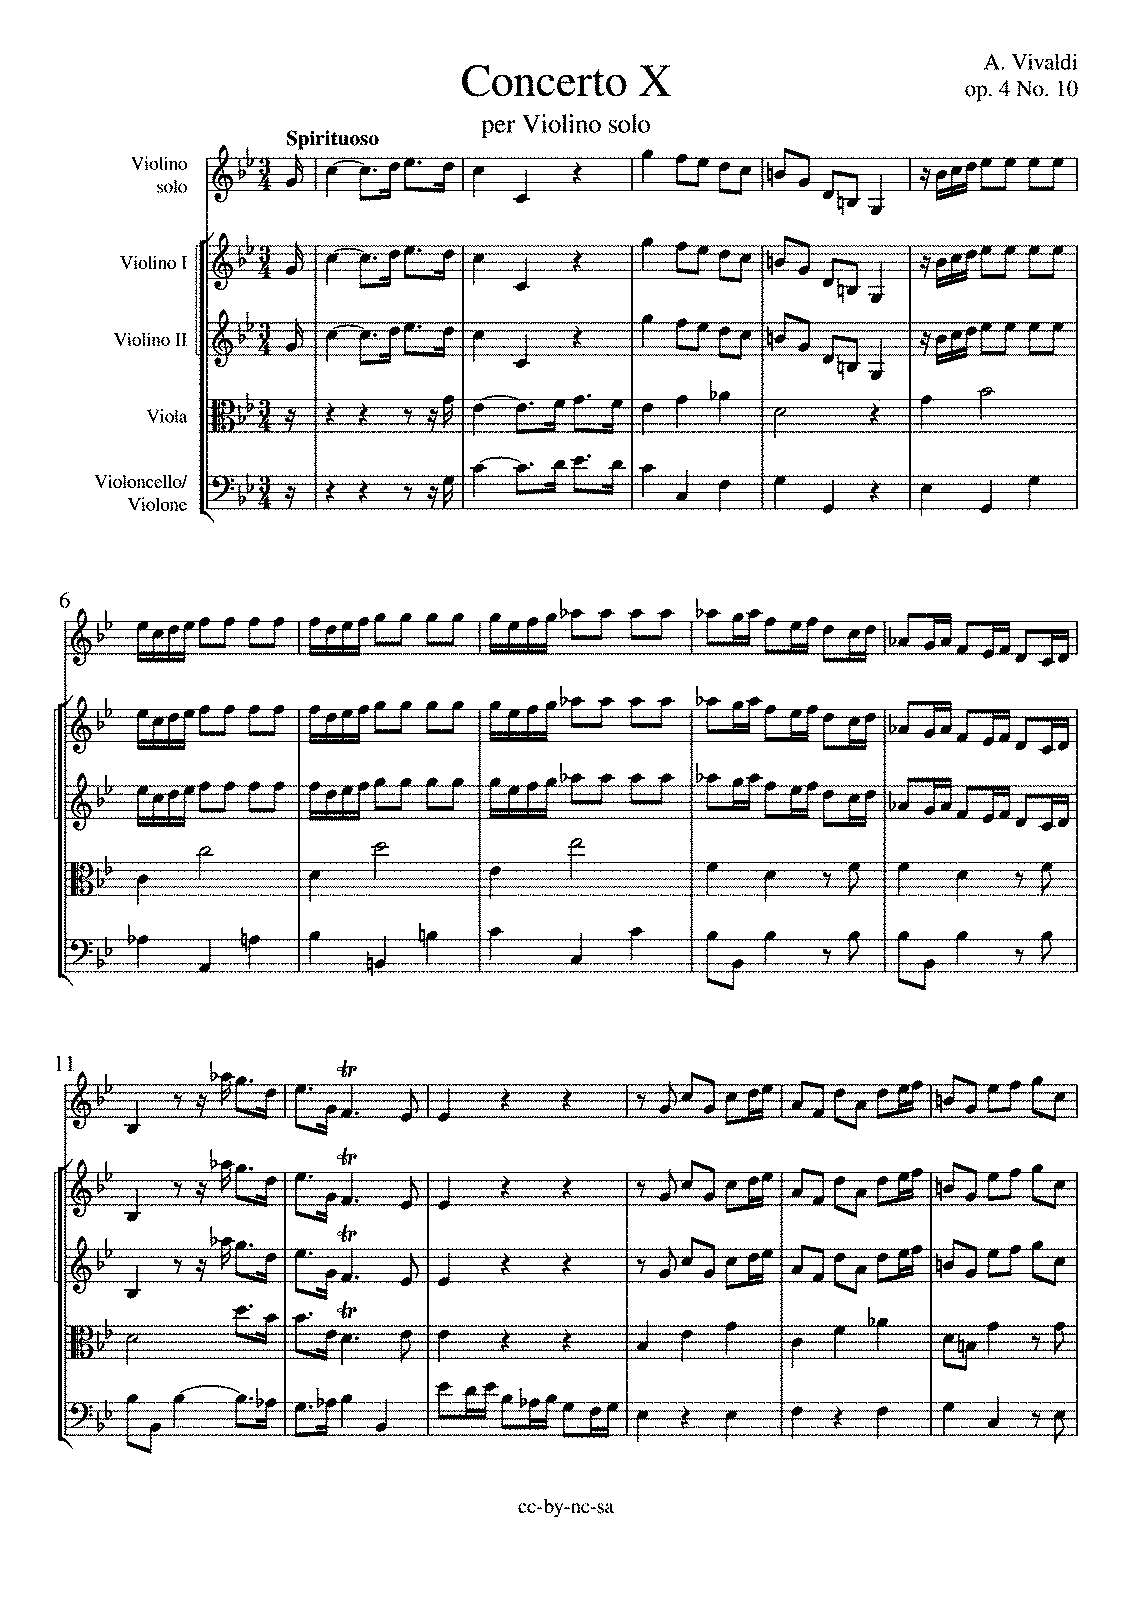 Violin Concerto in C minor, RV 196 (Vivaldi, Antonio) - IMSLP